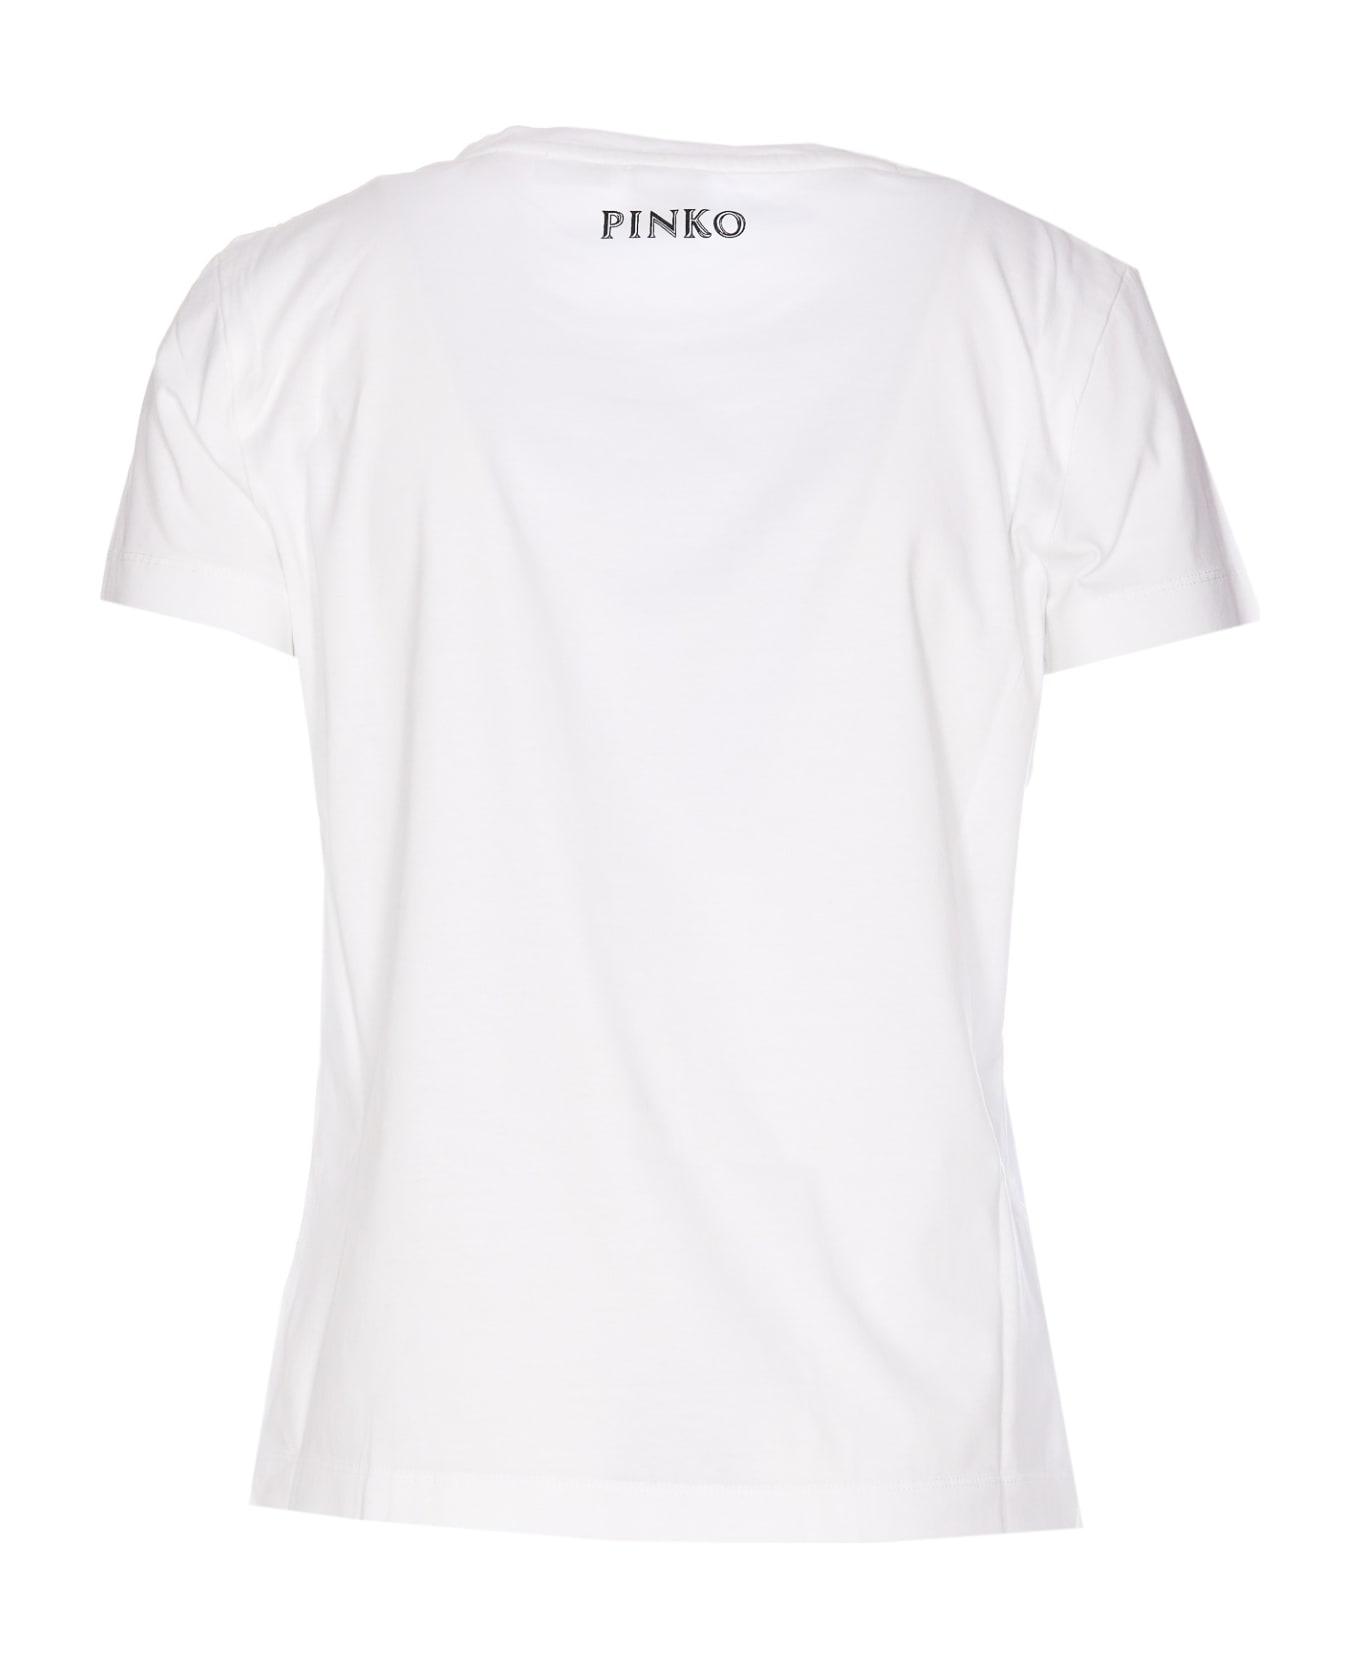 Pinko Graphic Printed Crewneck T-shirt - White